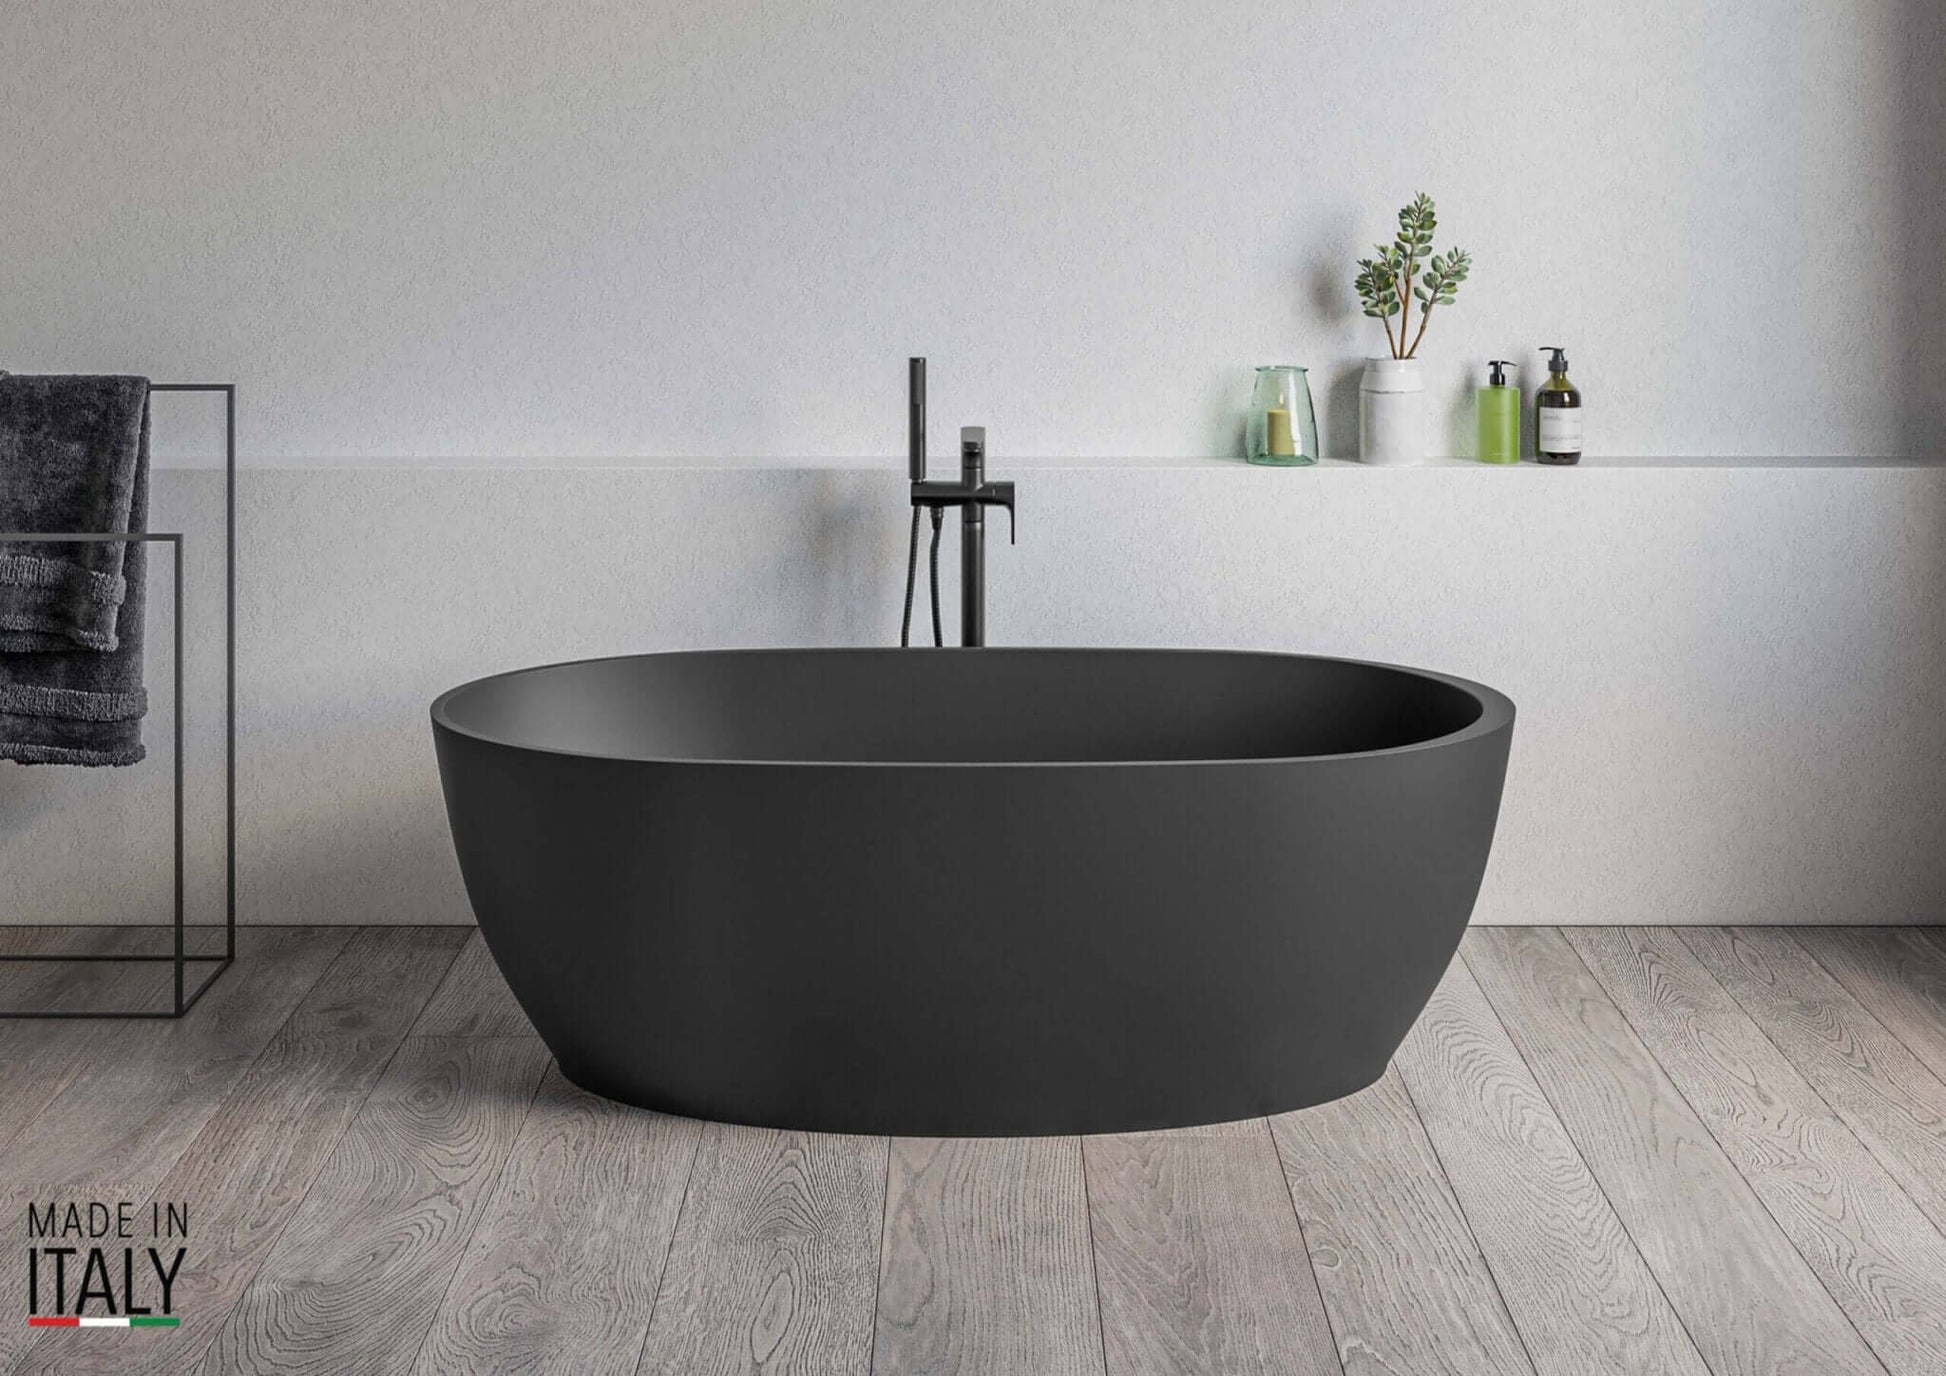 Ruvati 59″ x 27.5" Matte Black Free-Standing Canali Bathtub - Side View in White Bathroom